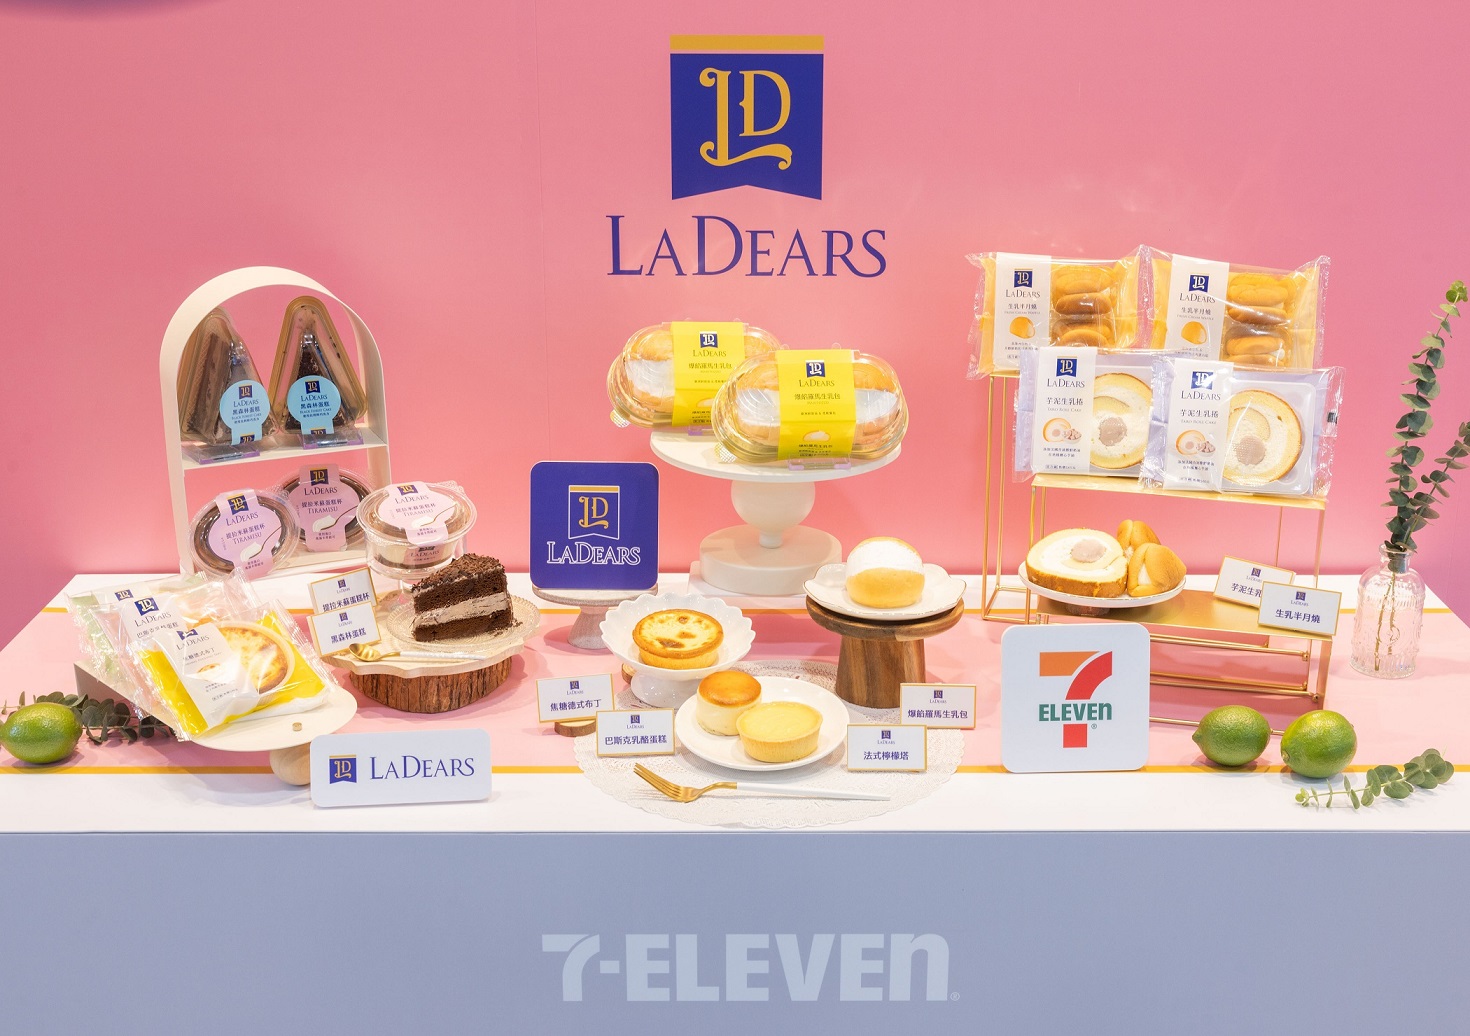 7-ELEVEN自今年5月起推出全新甜点品牌「LADEARS」，强调个人专属独处享用甜食的幸福疗愈感，并以「浅尝一份甜，疗愈每一天」为标语，将「西式冷藏甜点」做为开发主轴。图／7-ELEVEN提供